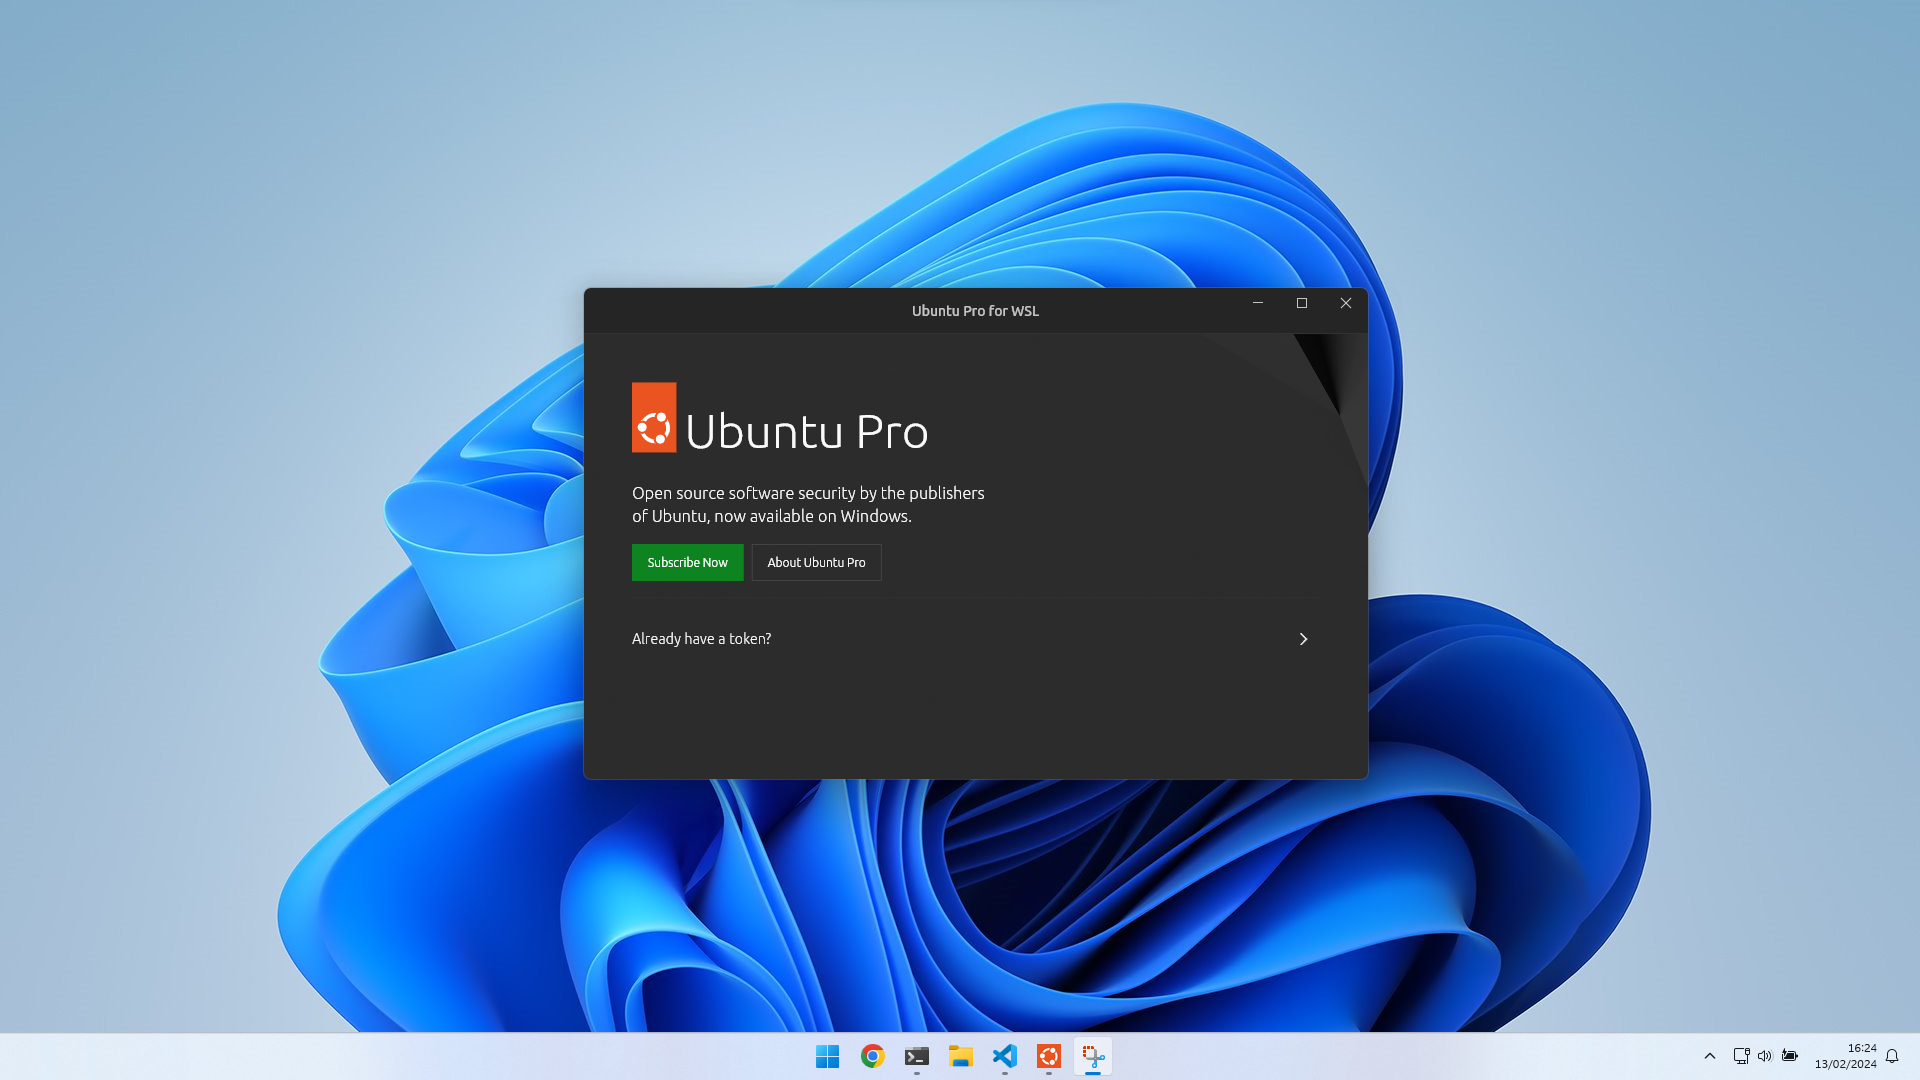 Image of the Ubuntu Pro for WSL GUI.